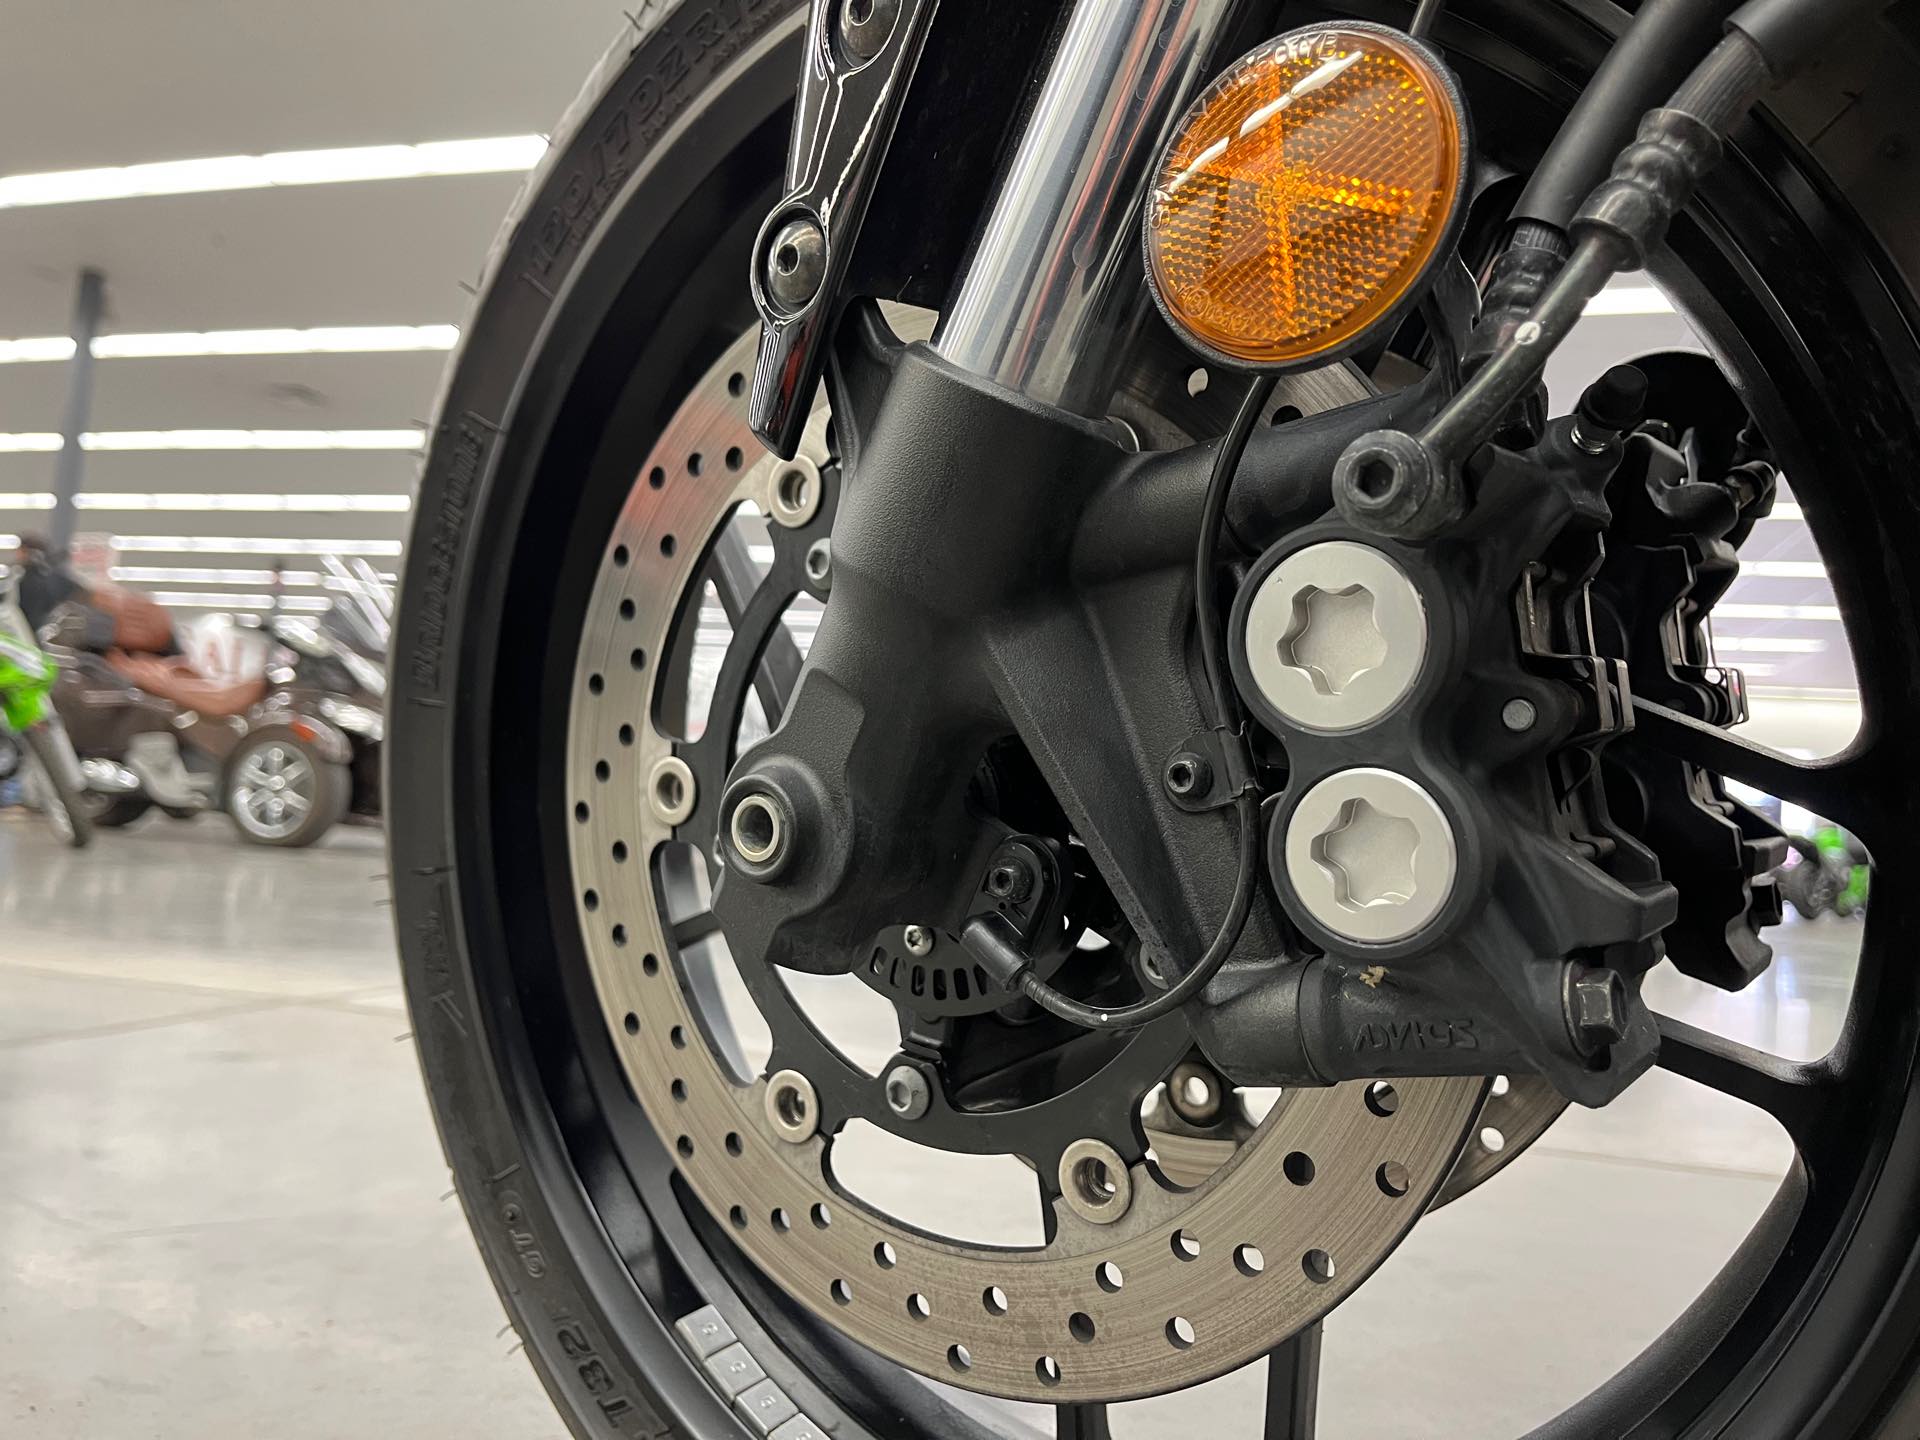 2022 Yamaha XSR 900 at Aces Motorcycles - Denver